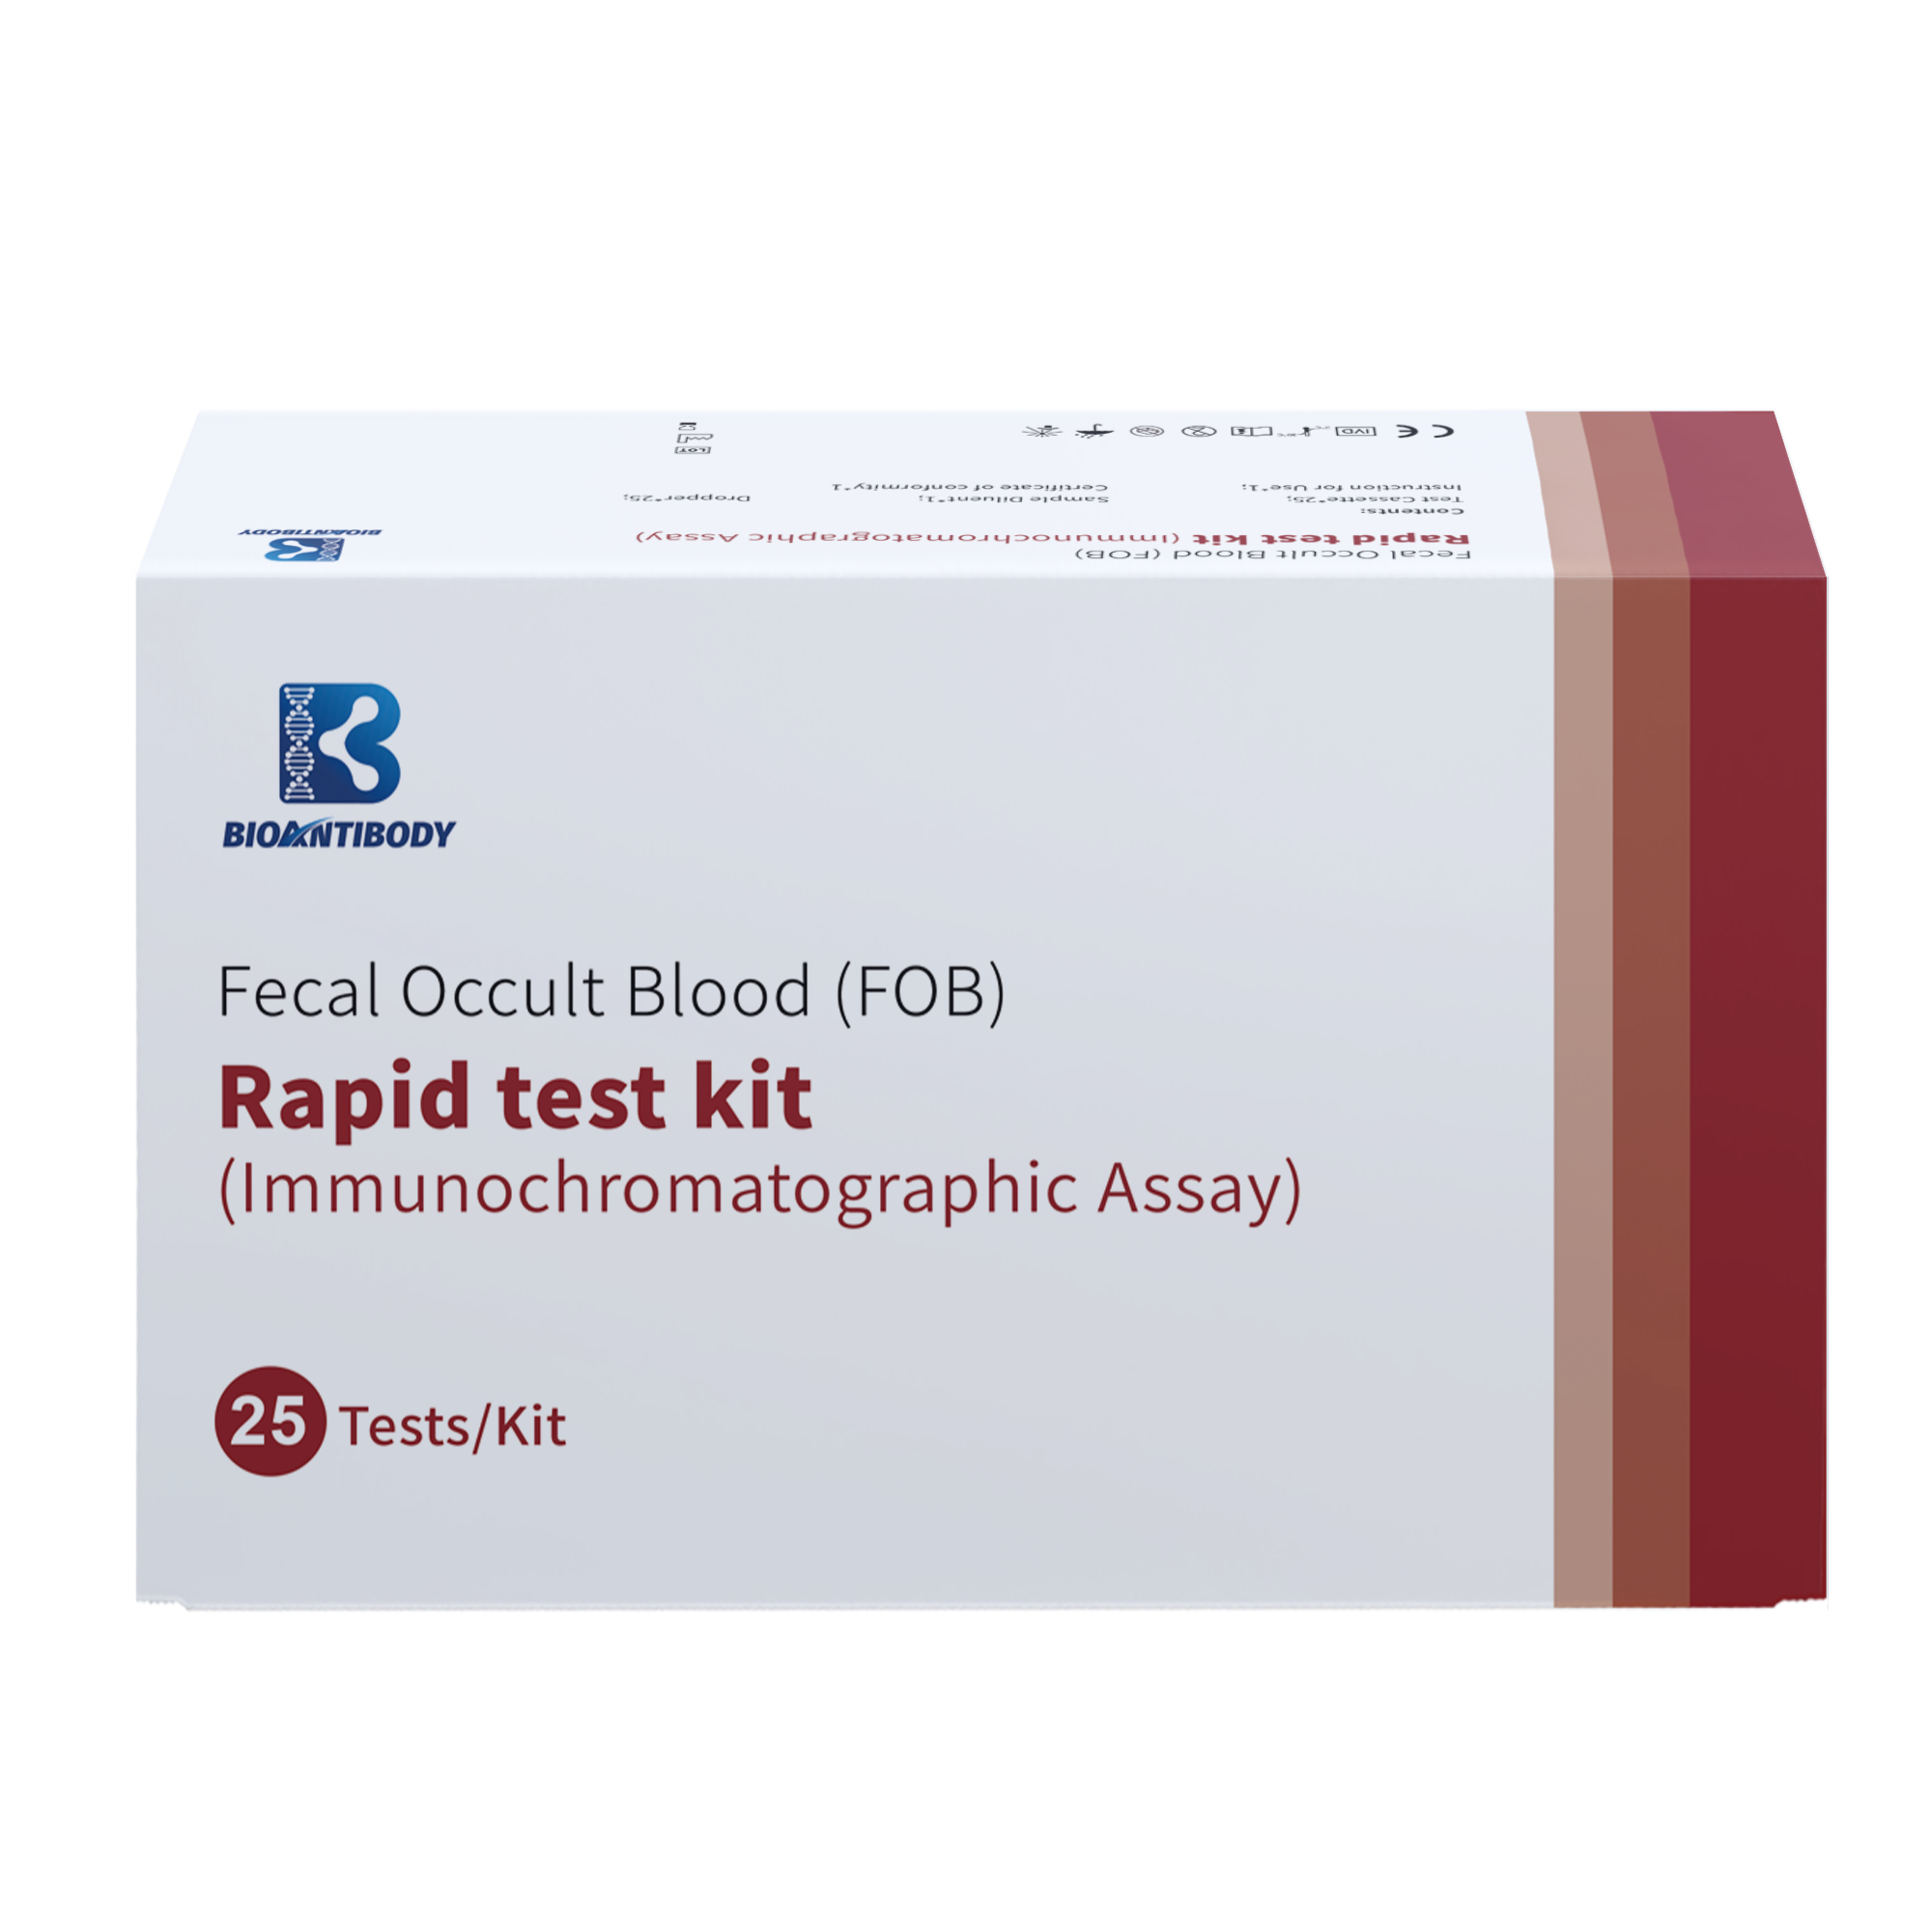 Fecal Occult Ropa (FOB) Rapid Test Kit (Immunochromatographic Assay)